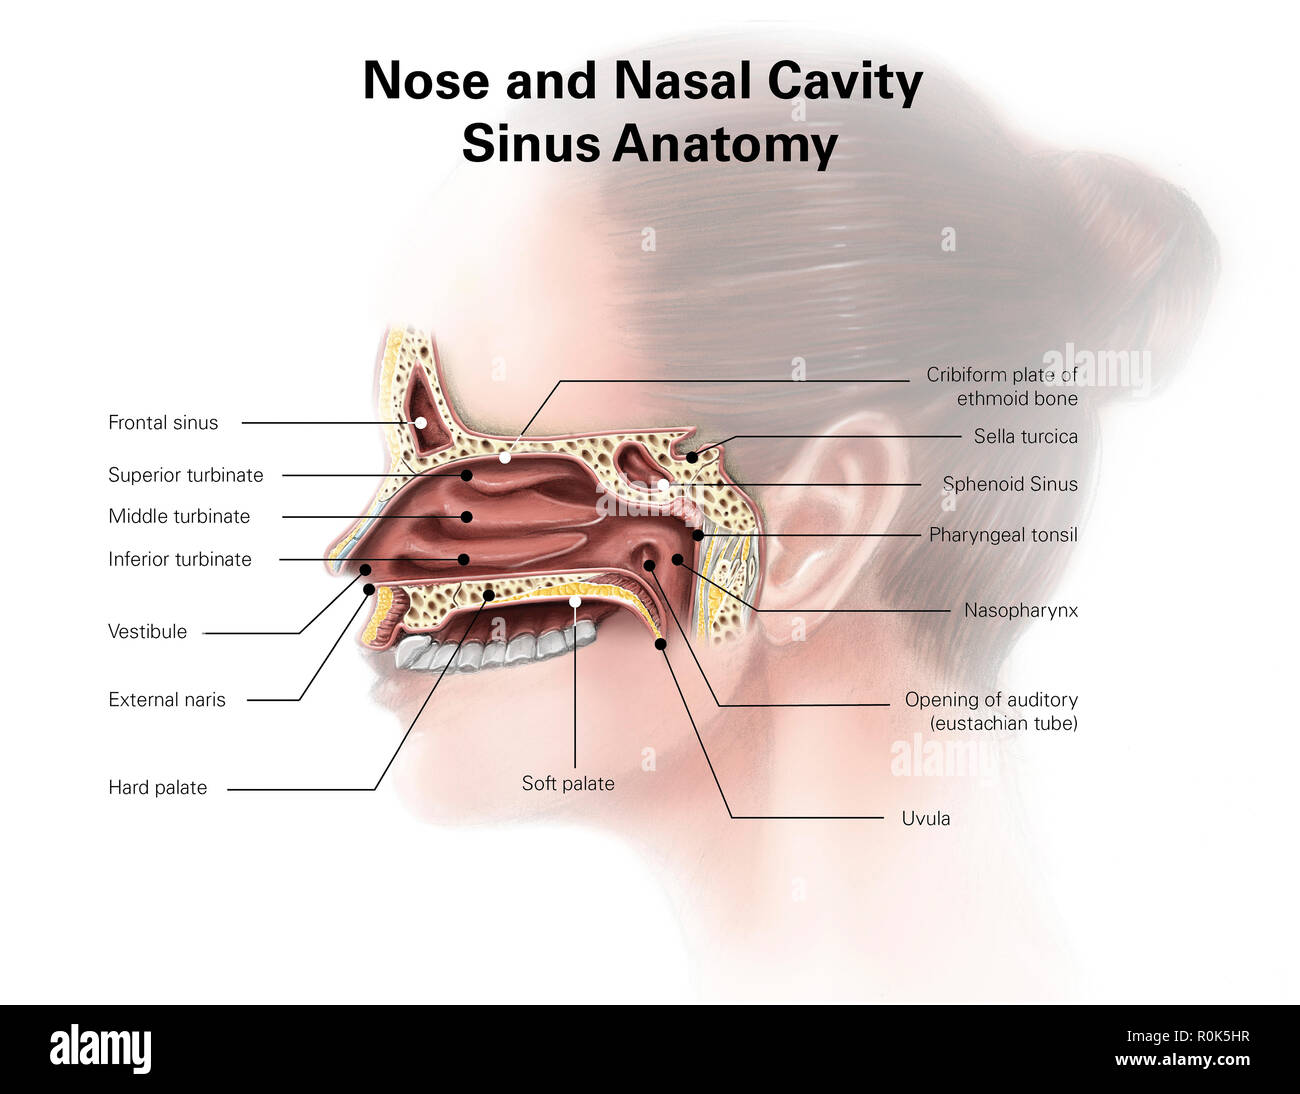 Digital illustration of nose and nasal sinus anatomy (no labels) Stock Photo